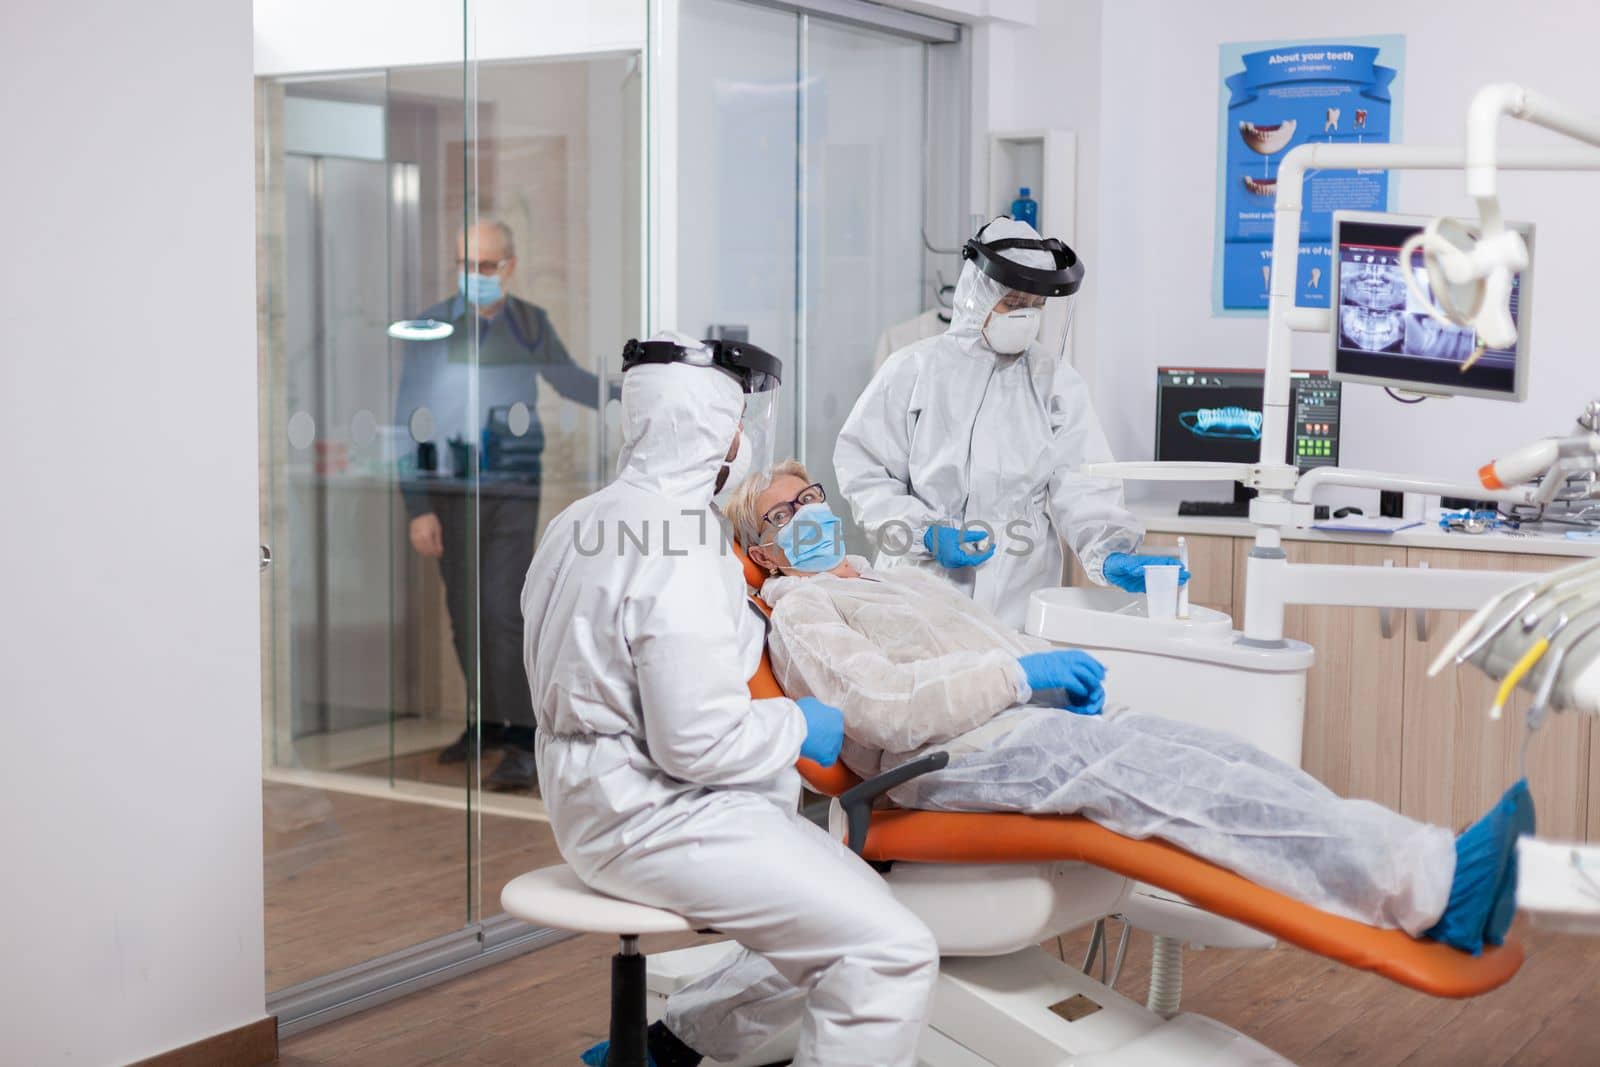 Senior patient wearing hazmat suit during coronavirus by DCStudio